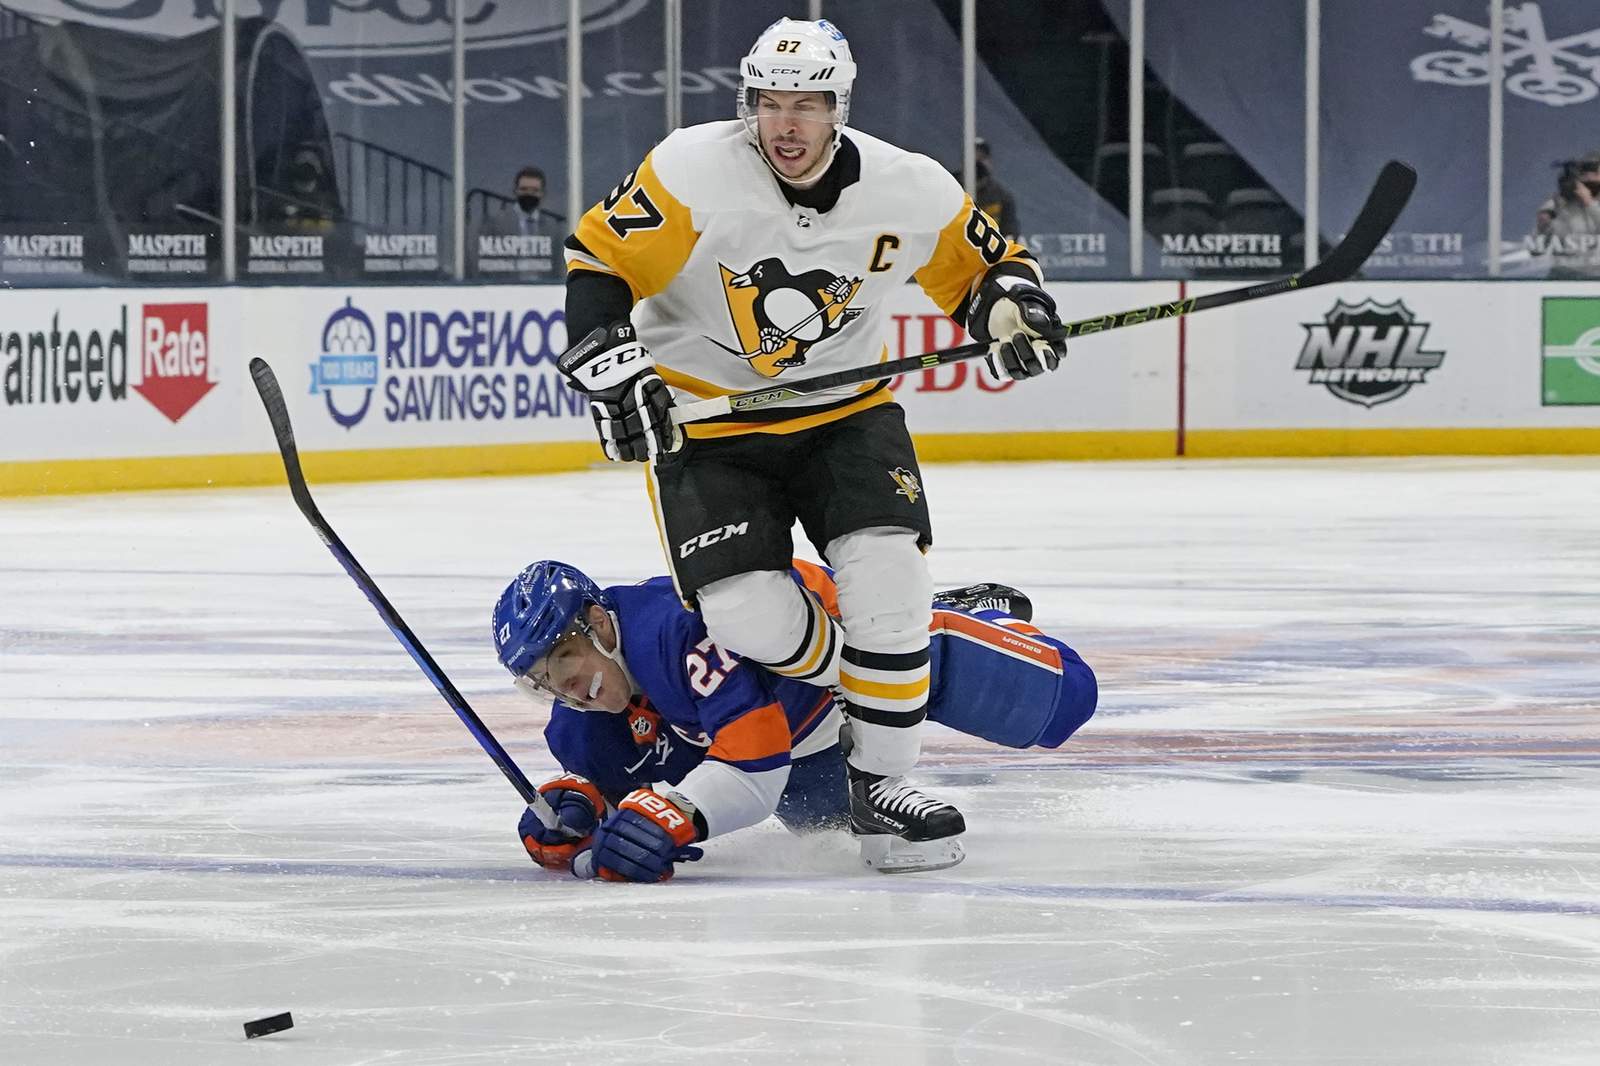 Jarome Iginla arrives in Pittsburgh, makes Penguins debut against New York  Islanders - The Hockey News